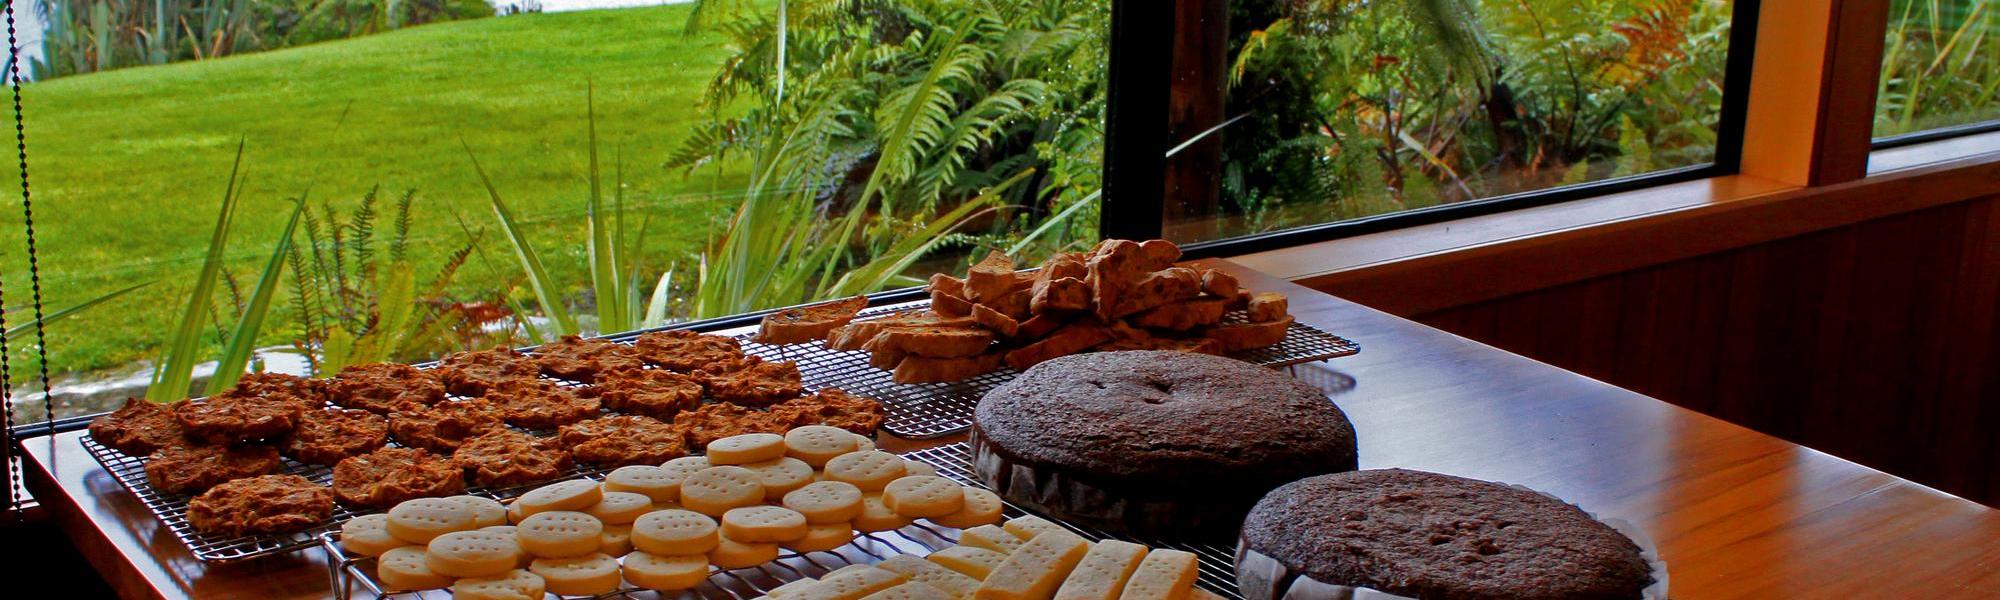 Fresh Kiwi baking at Moeraki Riverside Restaurant, South Island, NZ